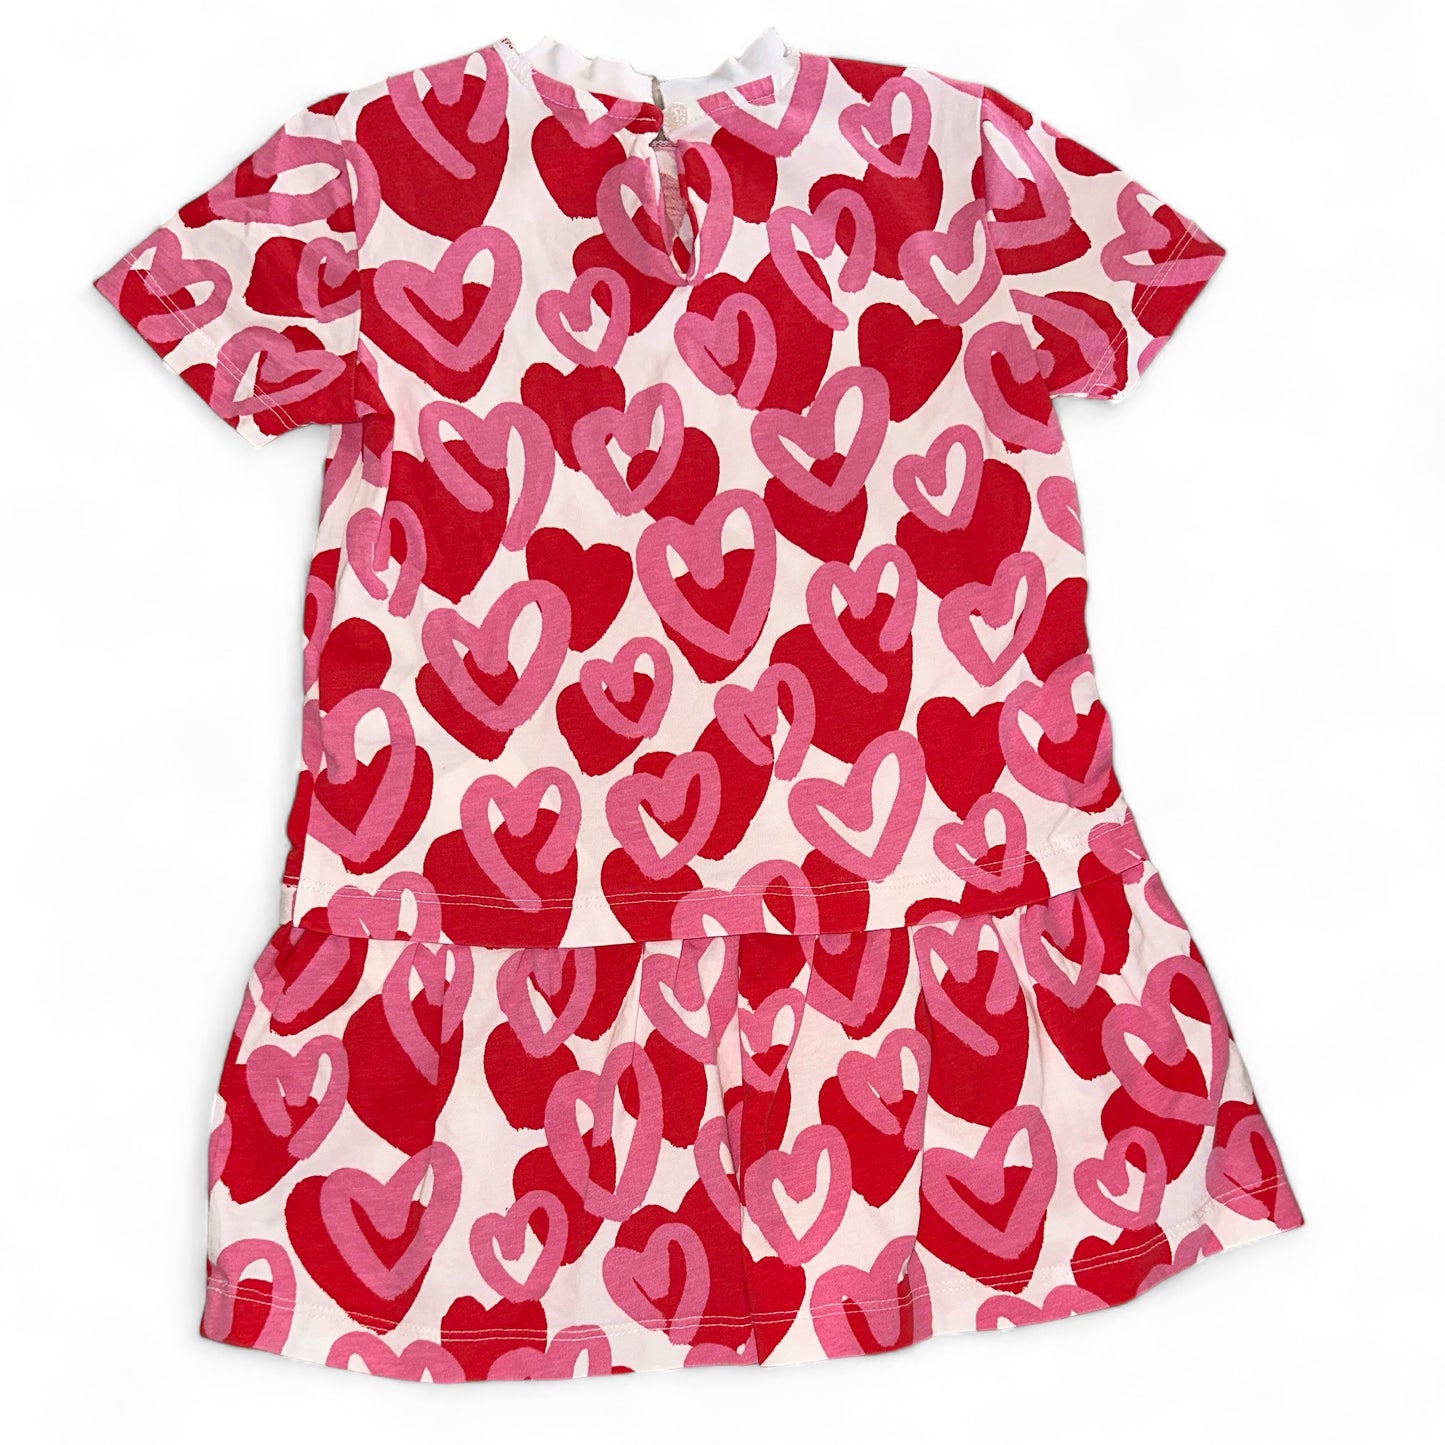 Stella McCartney Heart Dress